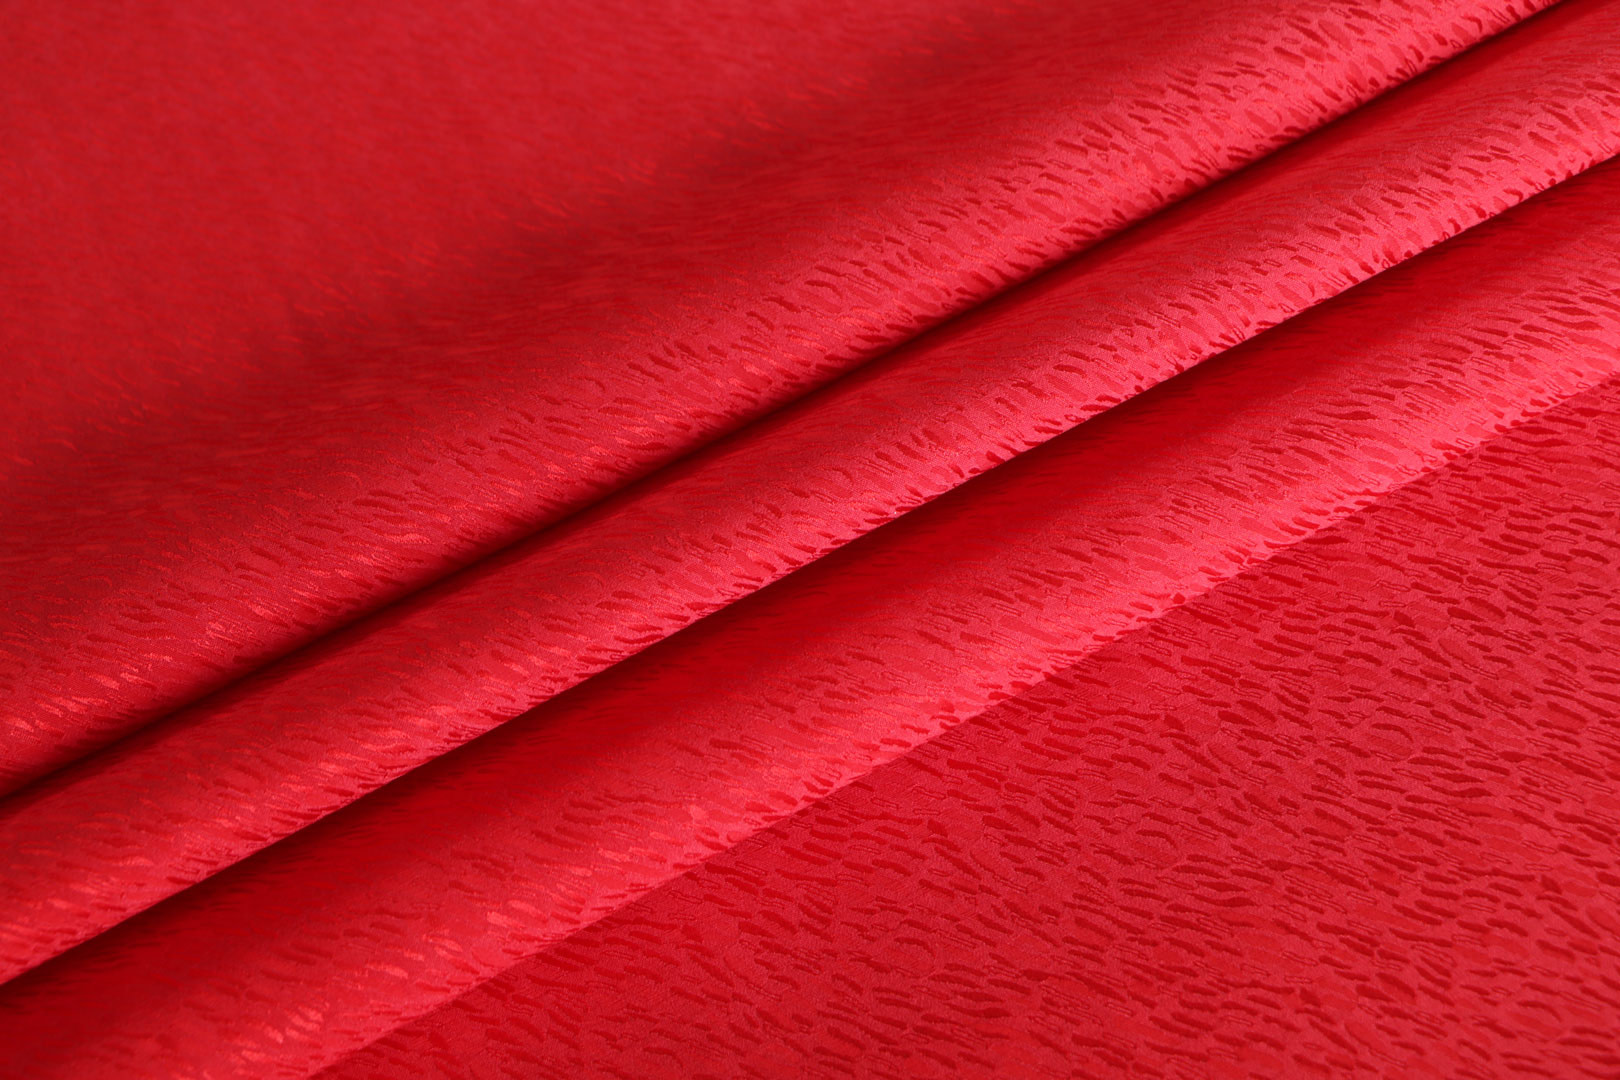 Newtess Apparel Fabric UN001392 01 